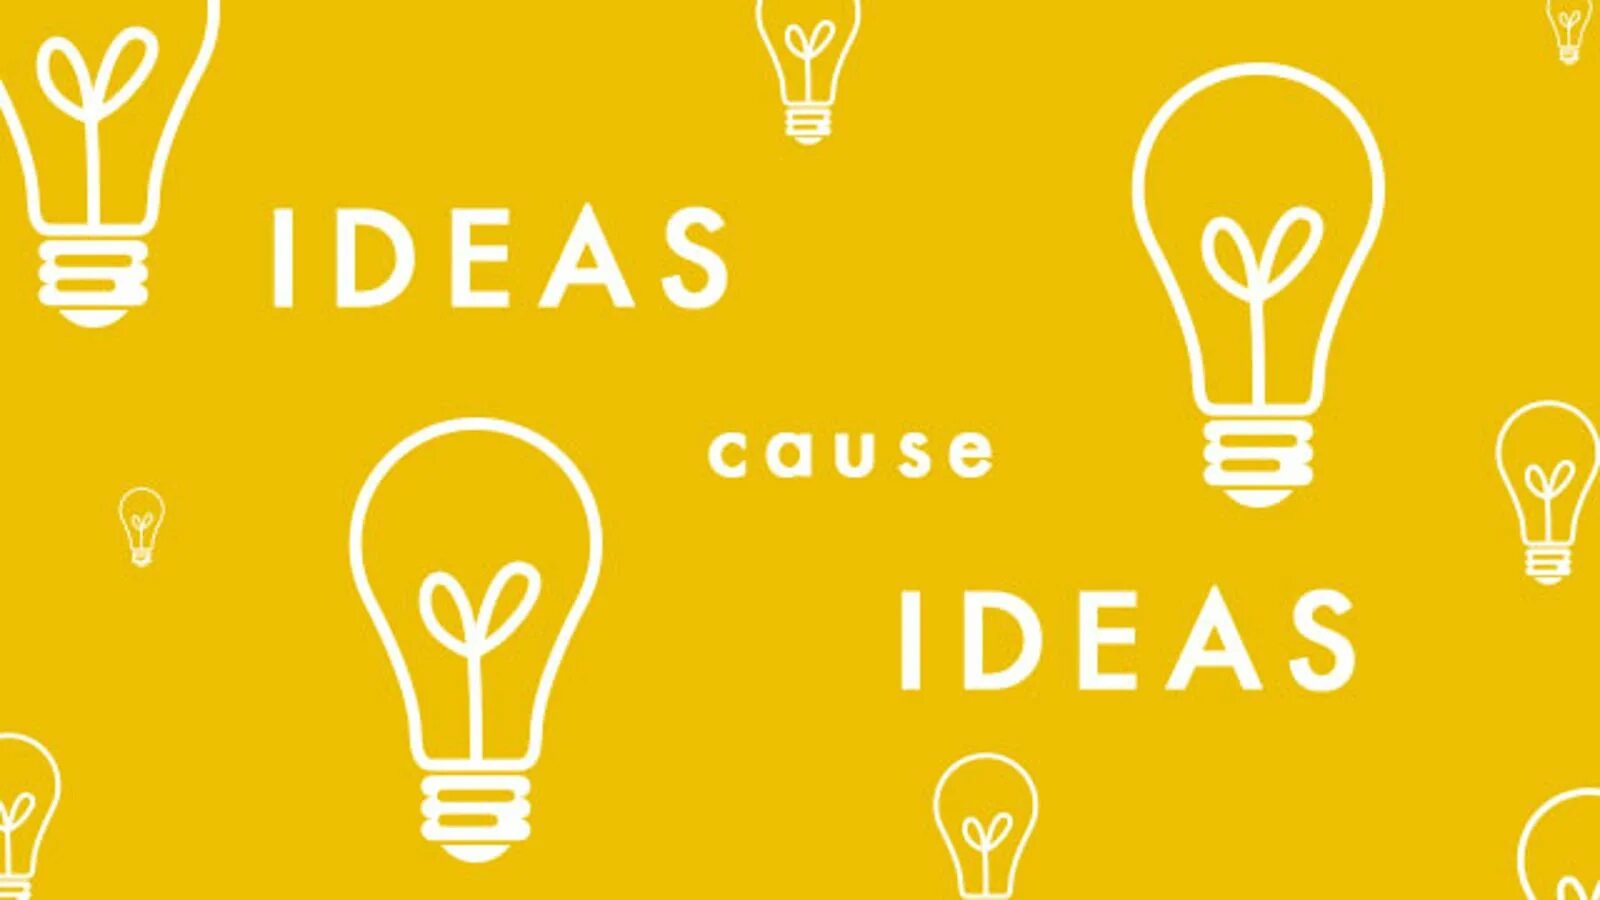 Idea. Share ideas. Best idea картинка. Share your ideas.